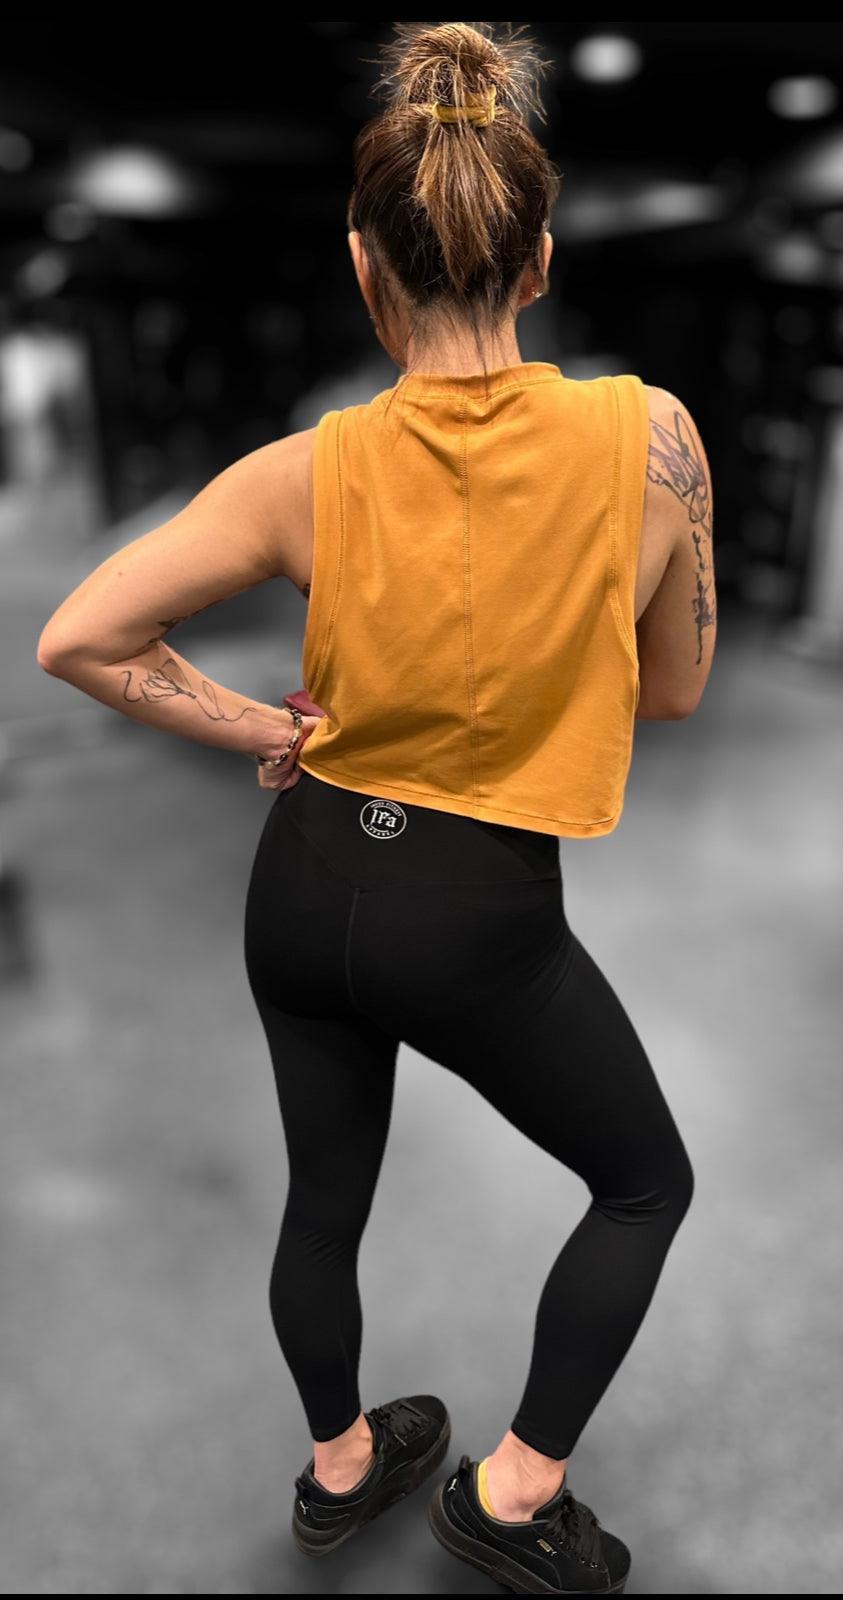 Plain black high waisted legging – Inked Fitness Apparel